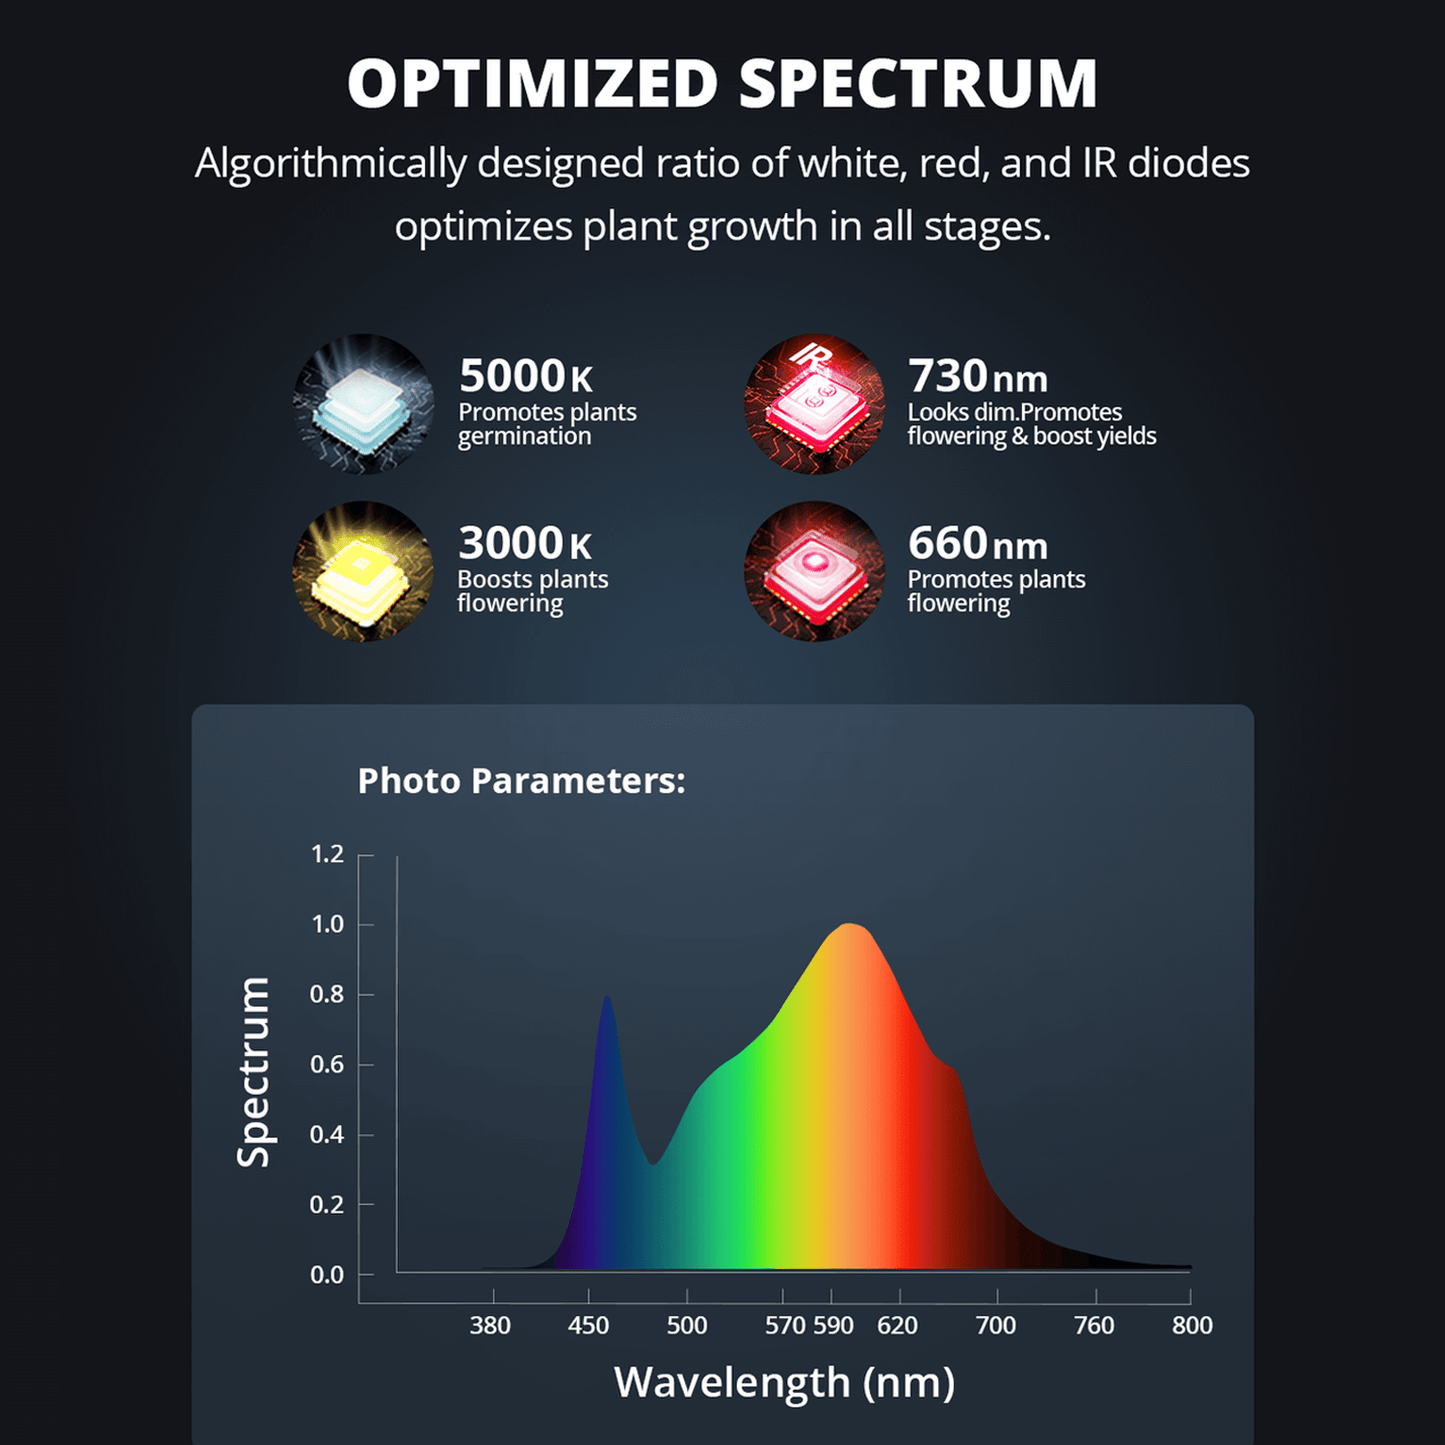 ViparSpectra P2000 200W Infrared Full Spectrum LED Grow Light | P2000 | Grow Tents Depot | Grow Lights |